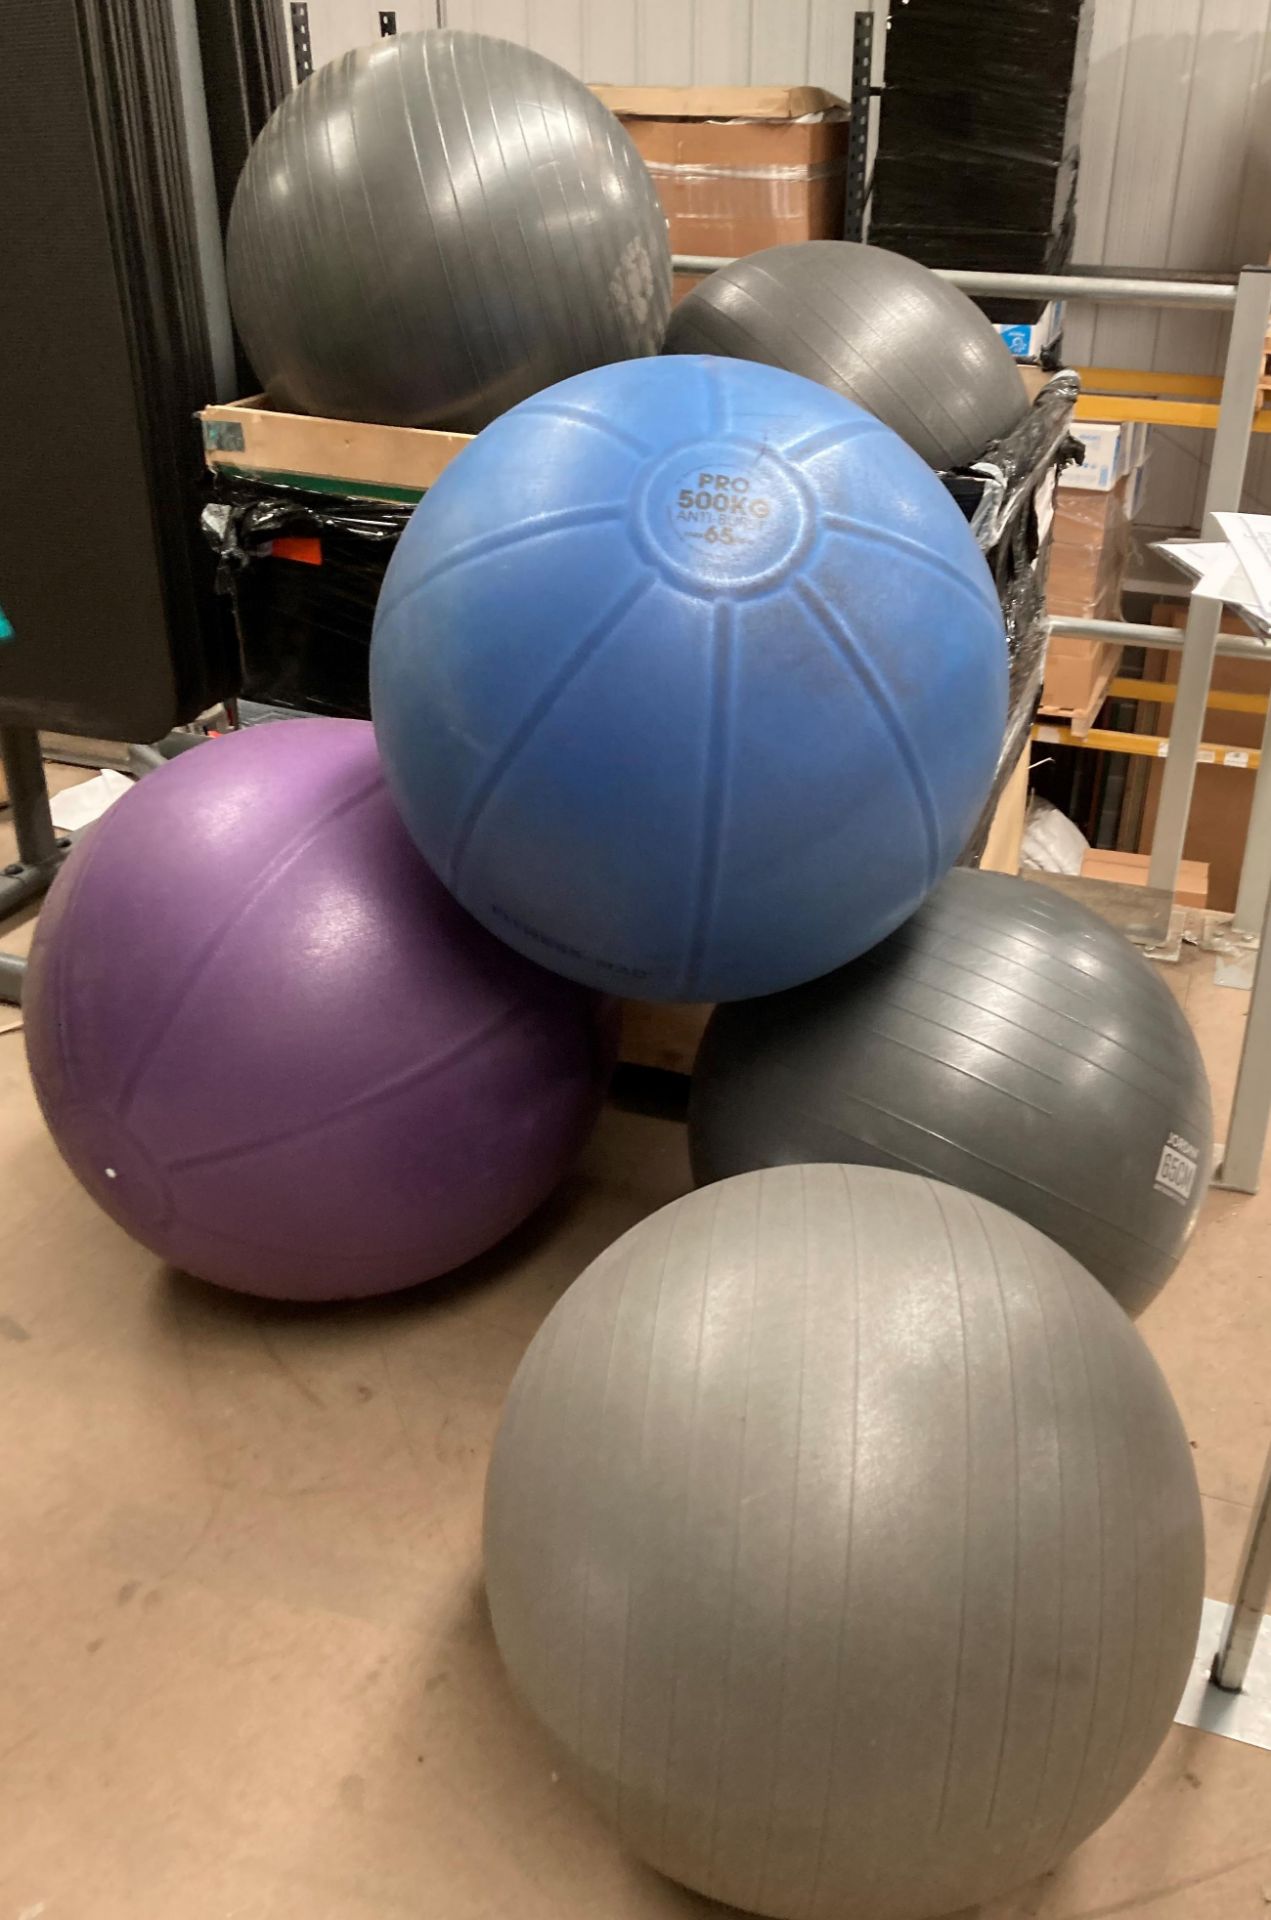 8 x exercise balls by Jordan, etc.